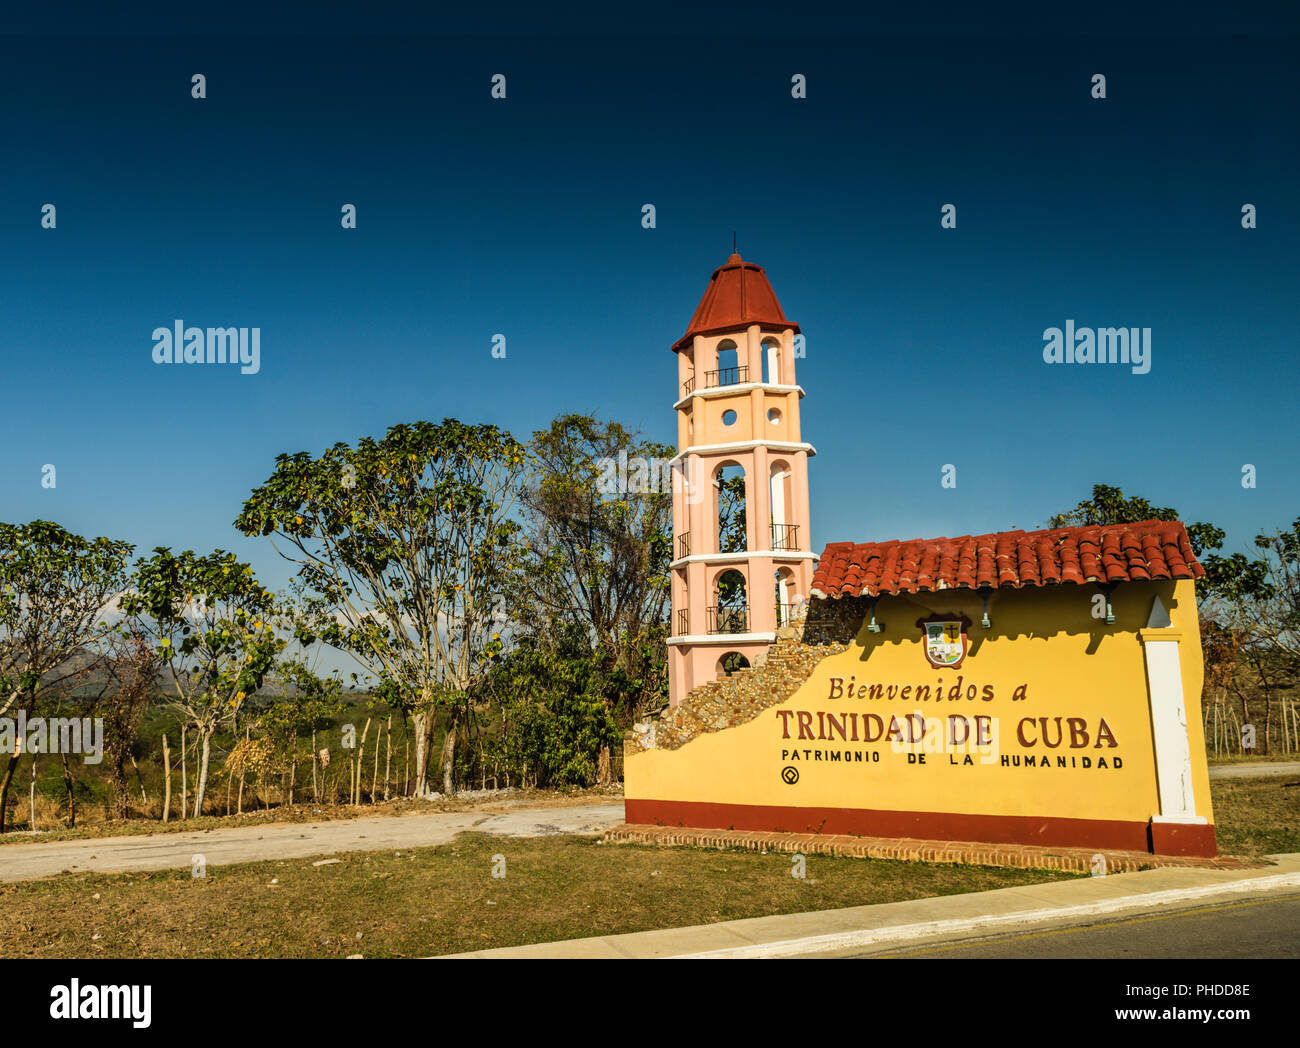 Trinidad, Kuba/15. März 2016: am Eingang zum UNESCO-Stadt Trinidad, Kuba Willkommen Besucher anmelden. Bienvenidos a Trinidad de Cuba. Stockfoto